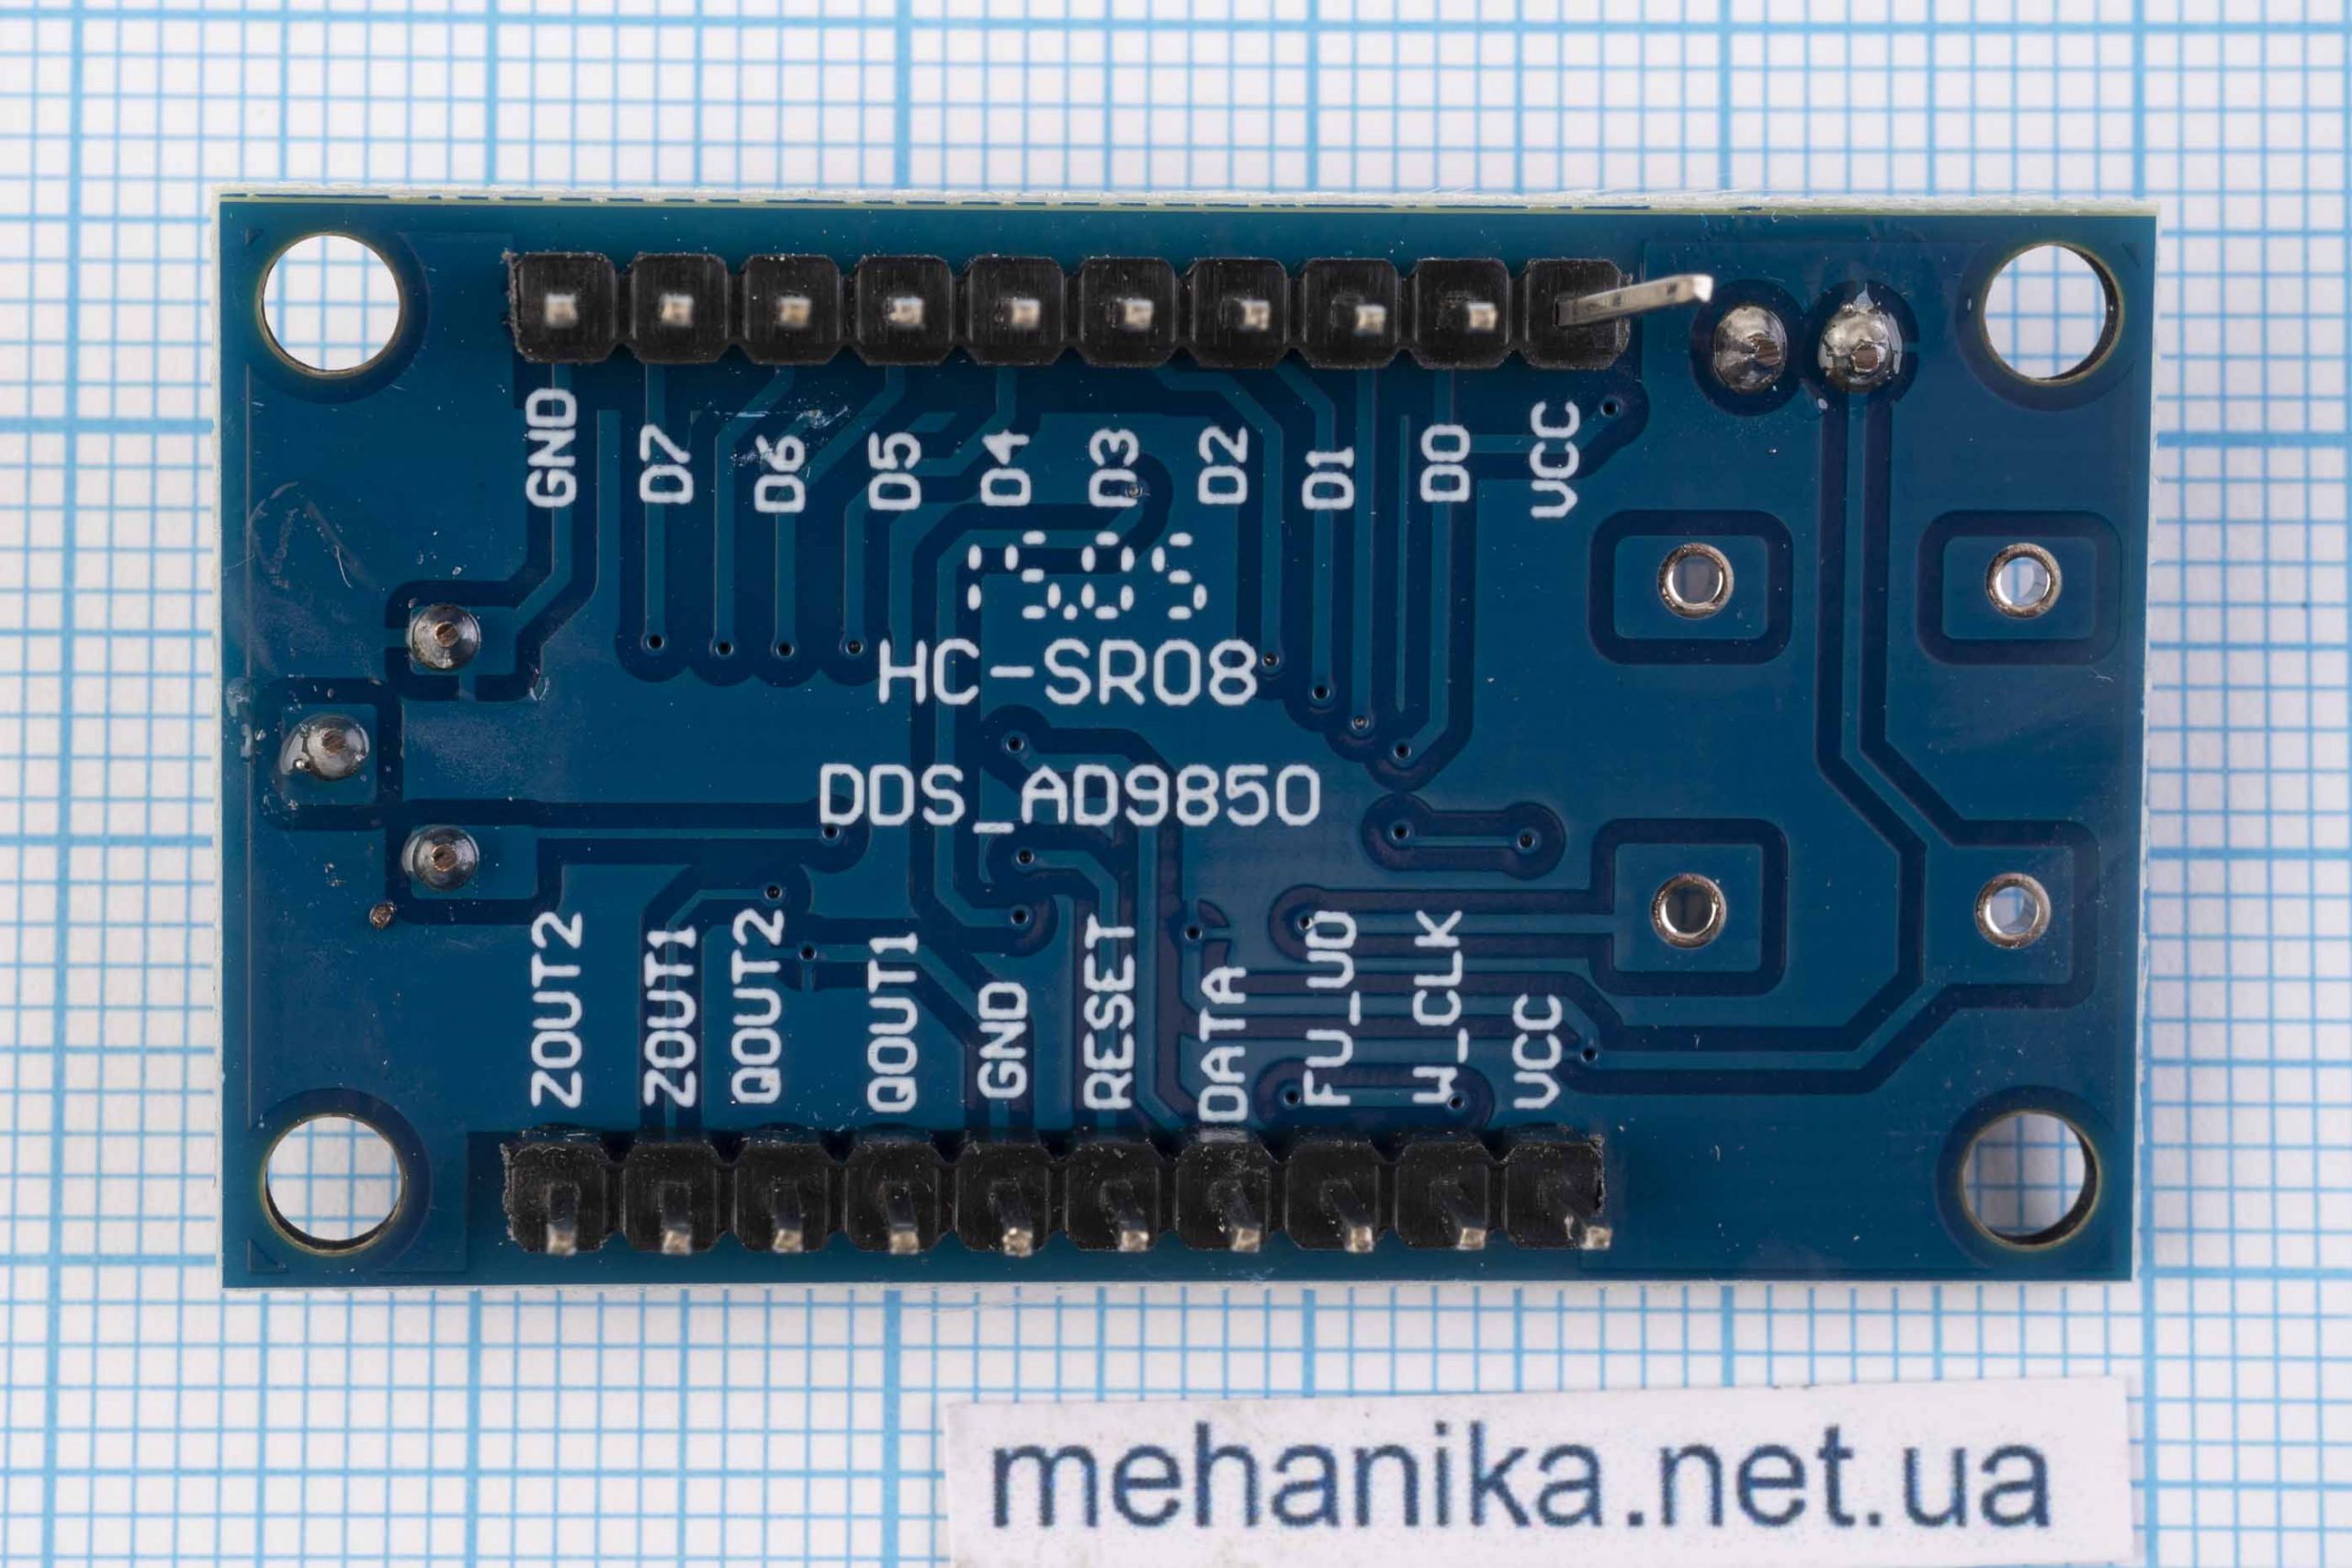 Генератор сигналу, синтезатор частоти DDS HC-SR08 на базі AD9833 для Arduino